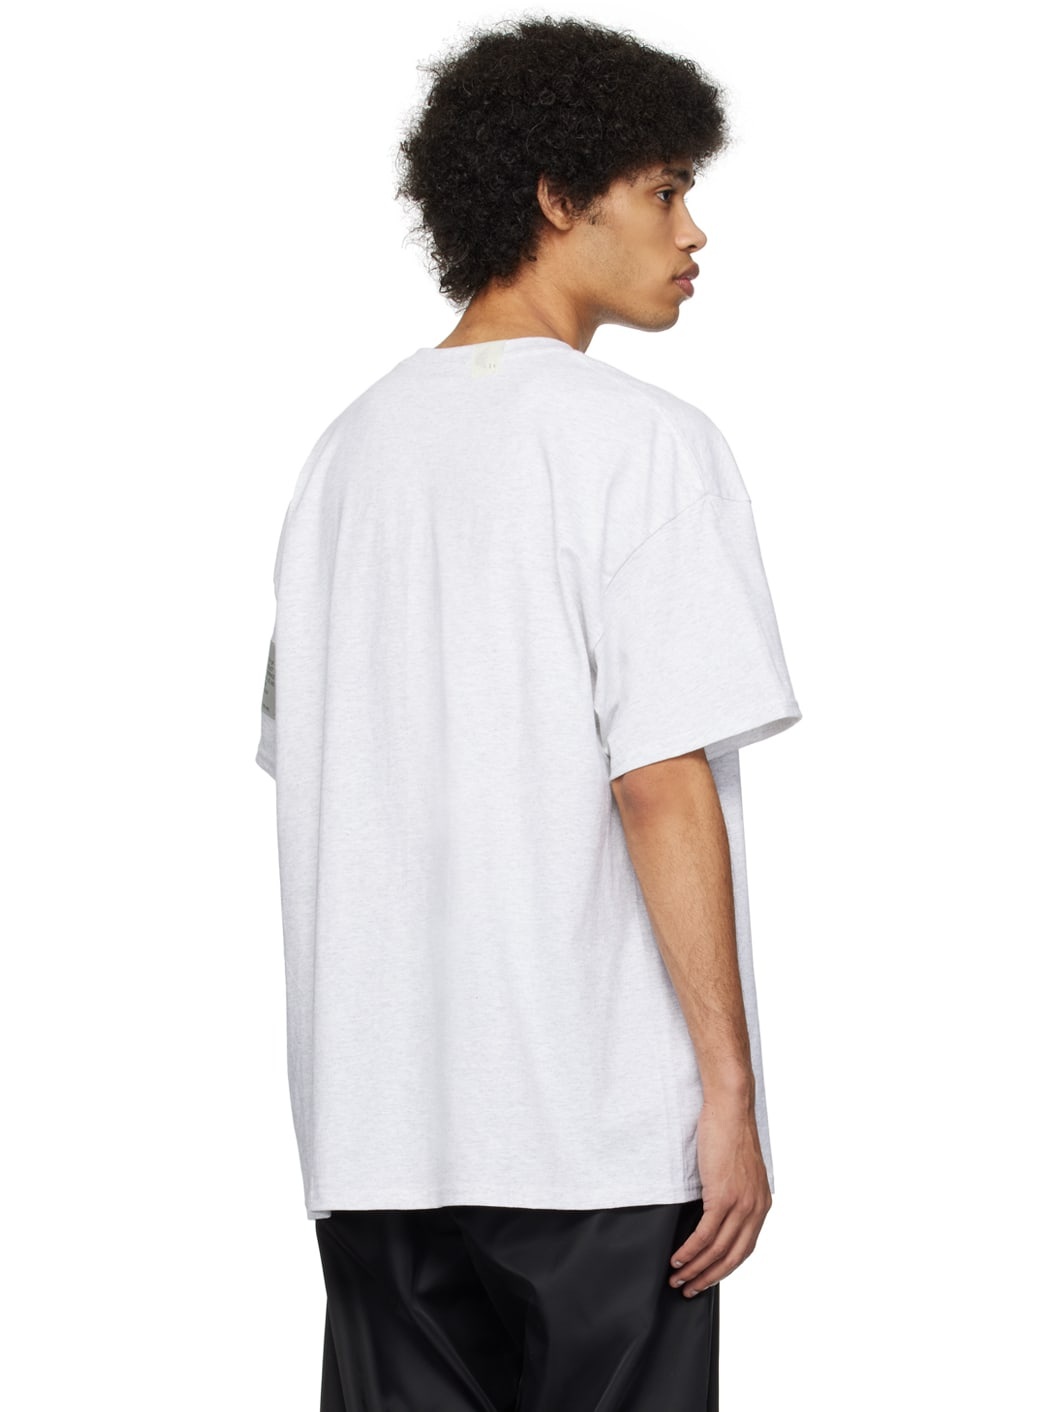 Gray Half Sleeve T-Shirt - 3